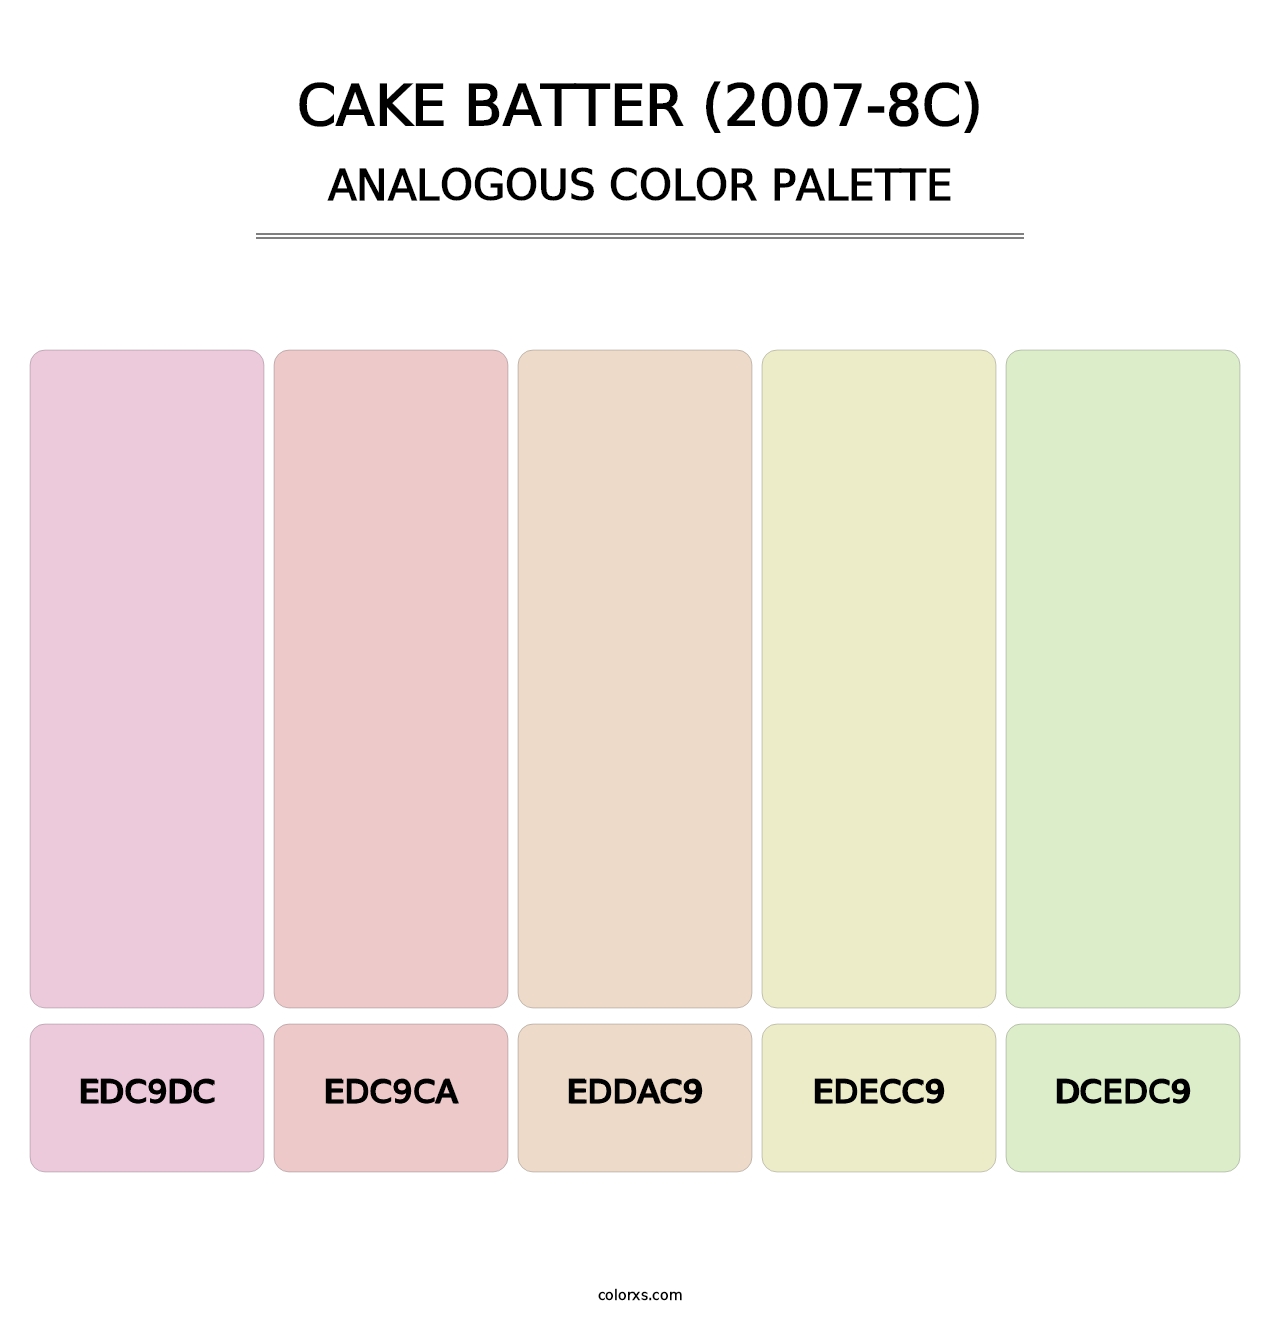 Cake Batter (2007-8C) - Analogous Color Palette